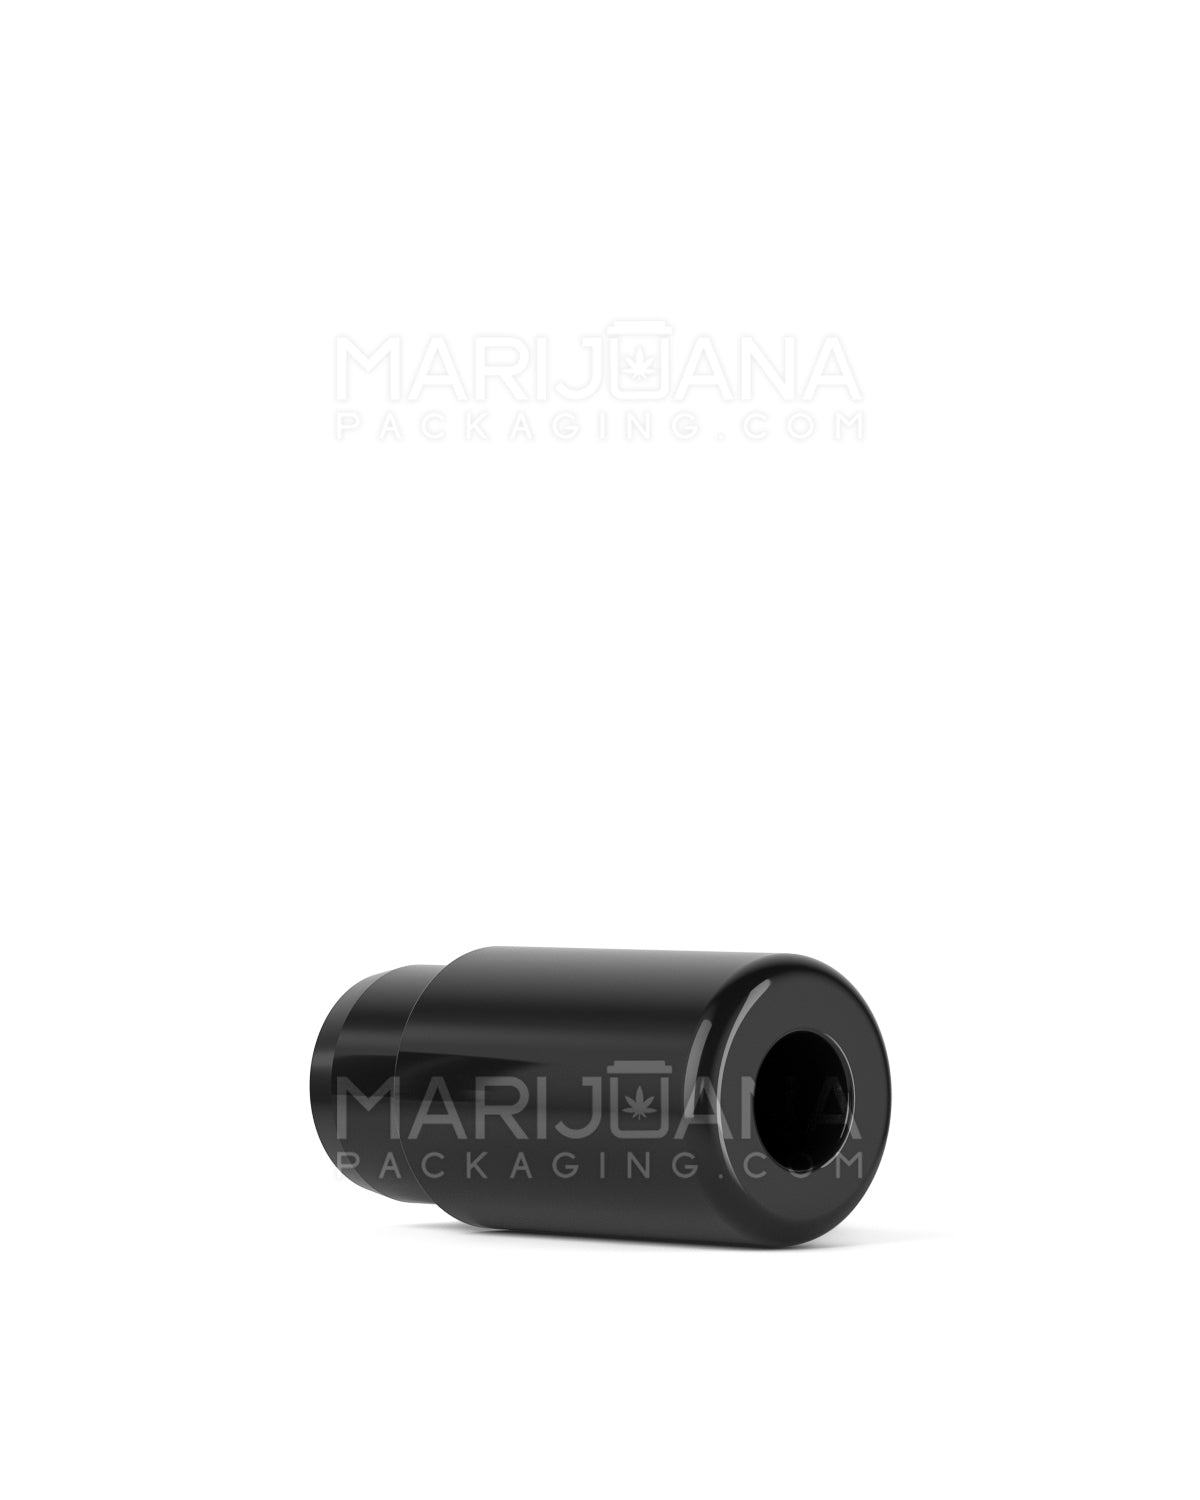 AVD | Barrel Vape Mouthpiece for GoodCarts Plastic Cartridges | Black Plastic - Press On - 600 Count - 5